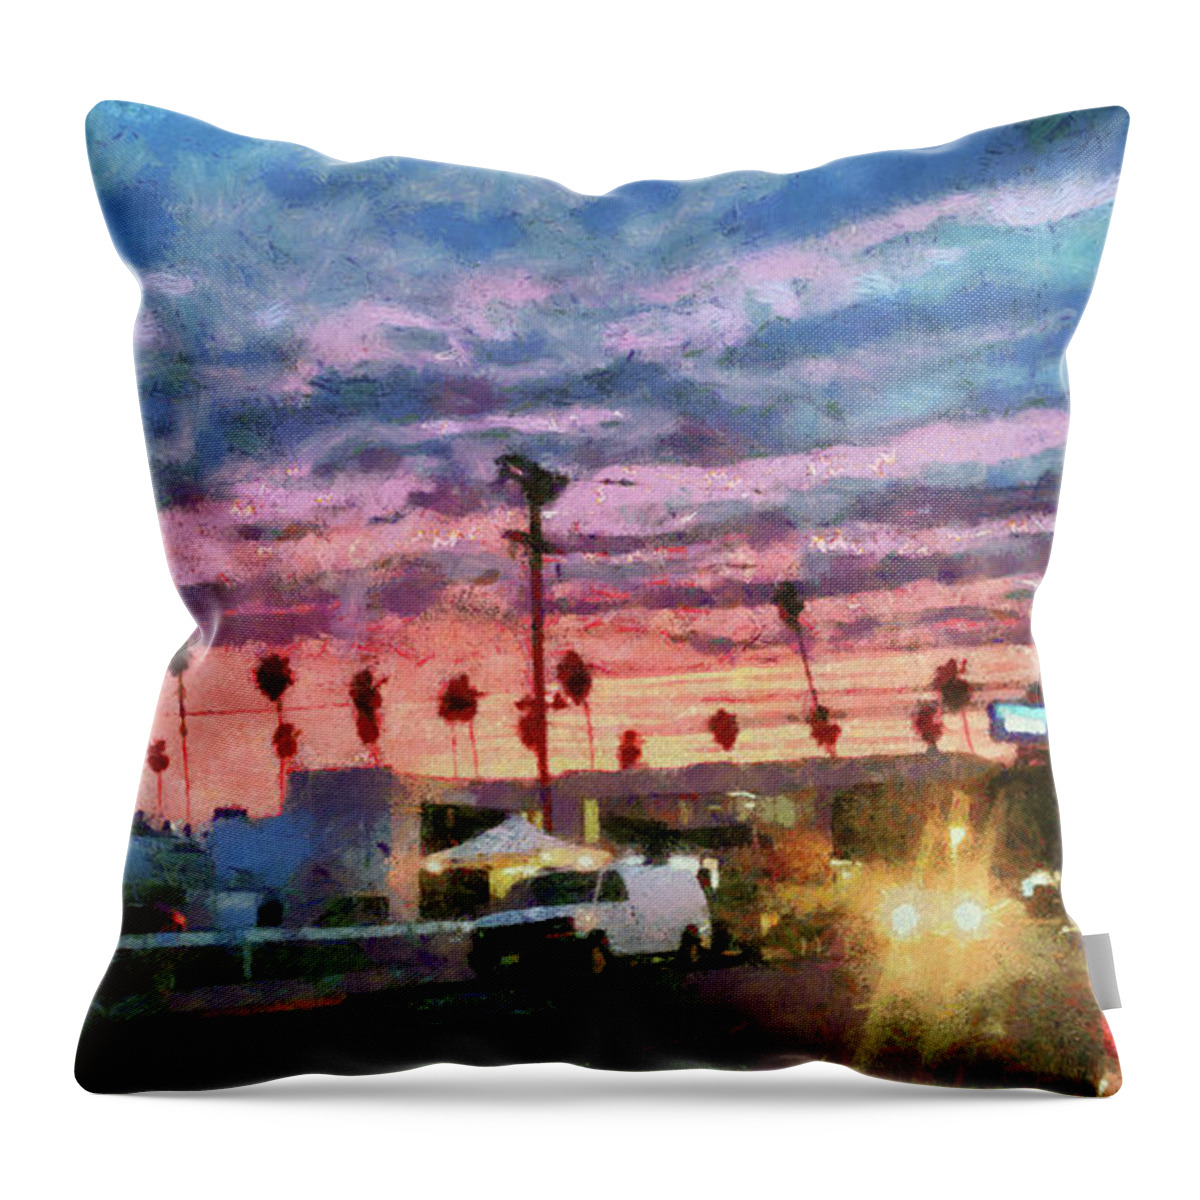 Sunset Throw Pillow featuring the digital art Sunset in Santa Monica by Bernie Sirelson